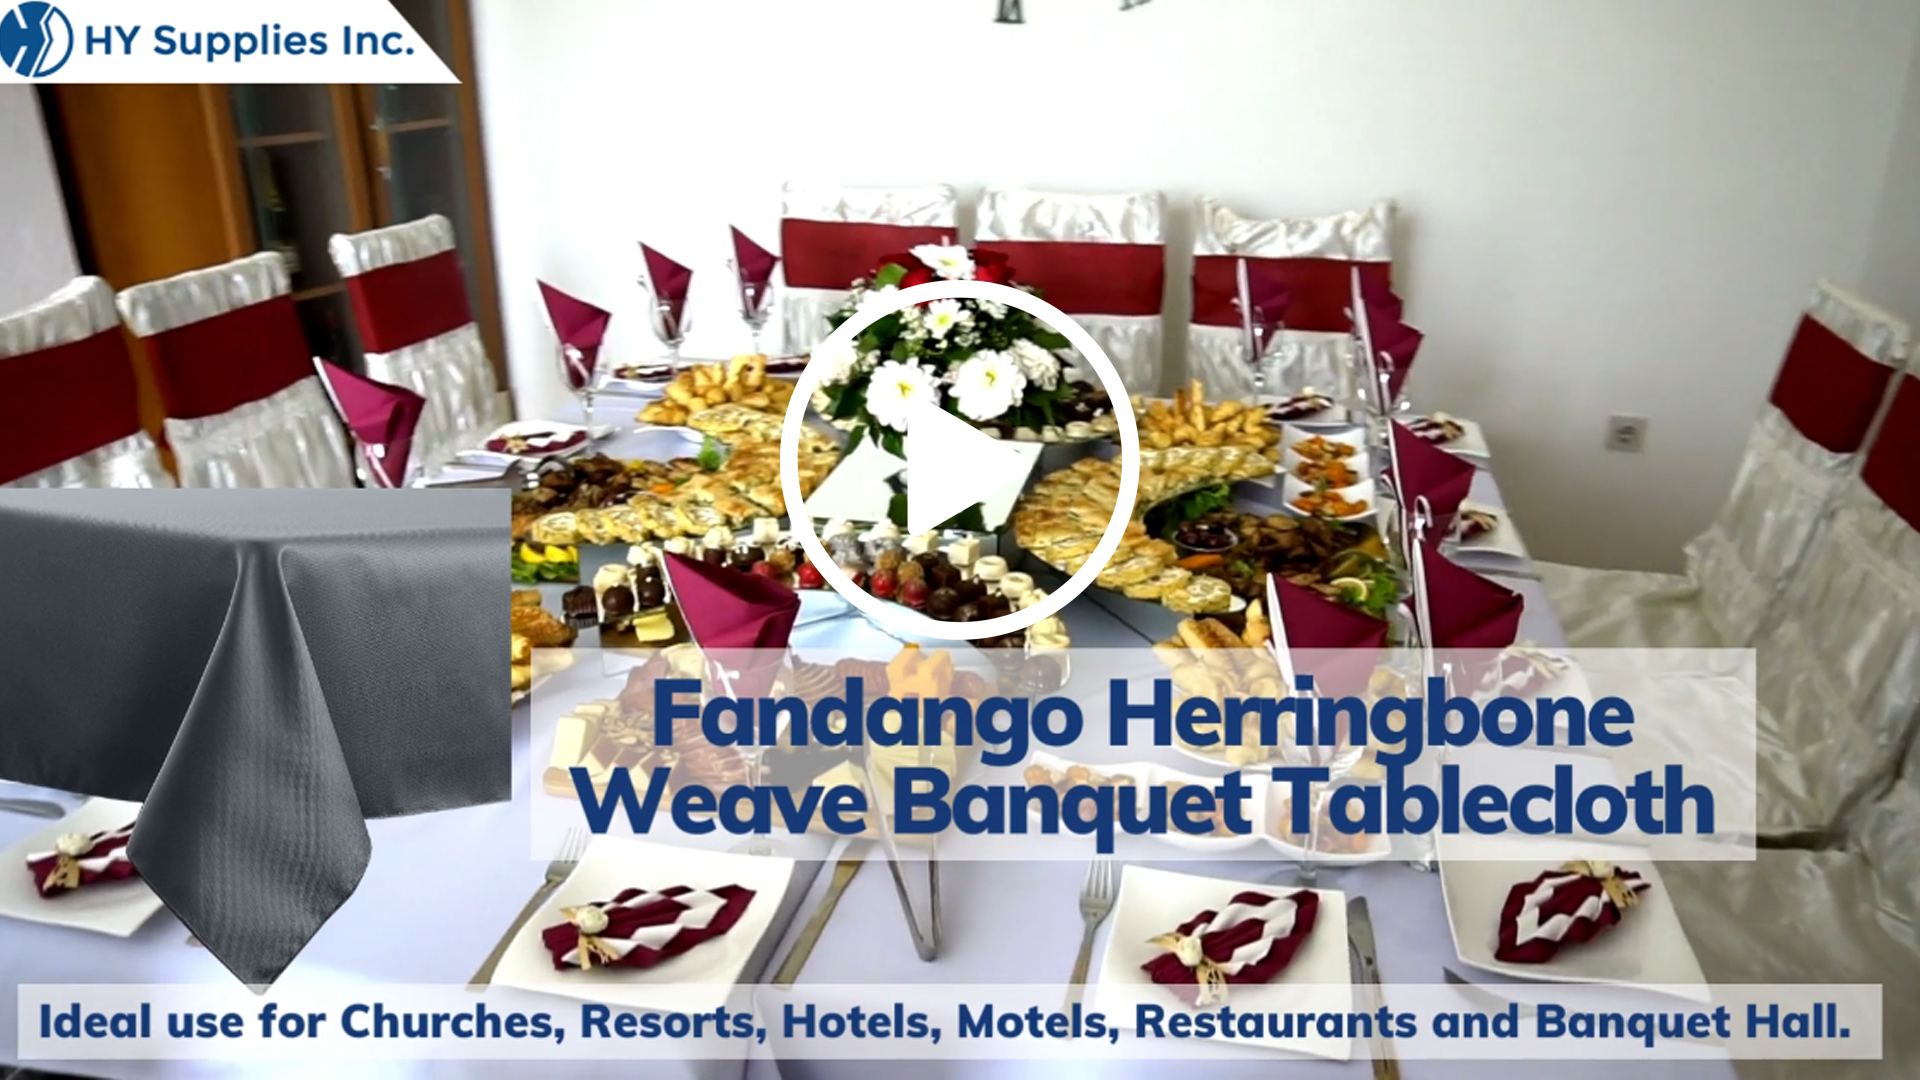 Fandango Herringbone Weave Square Tablecloth